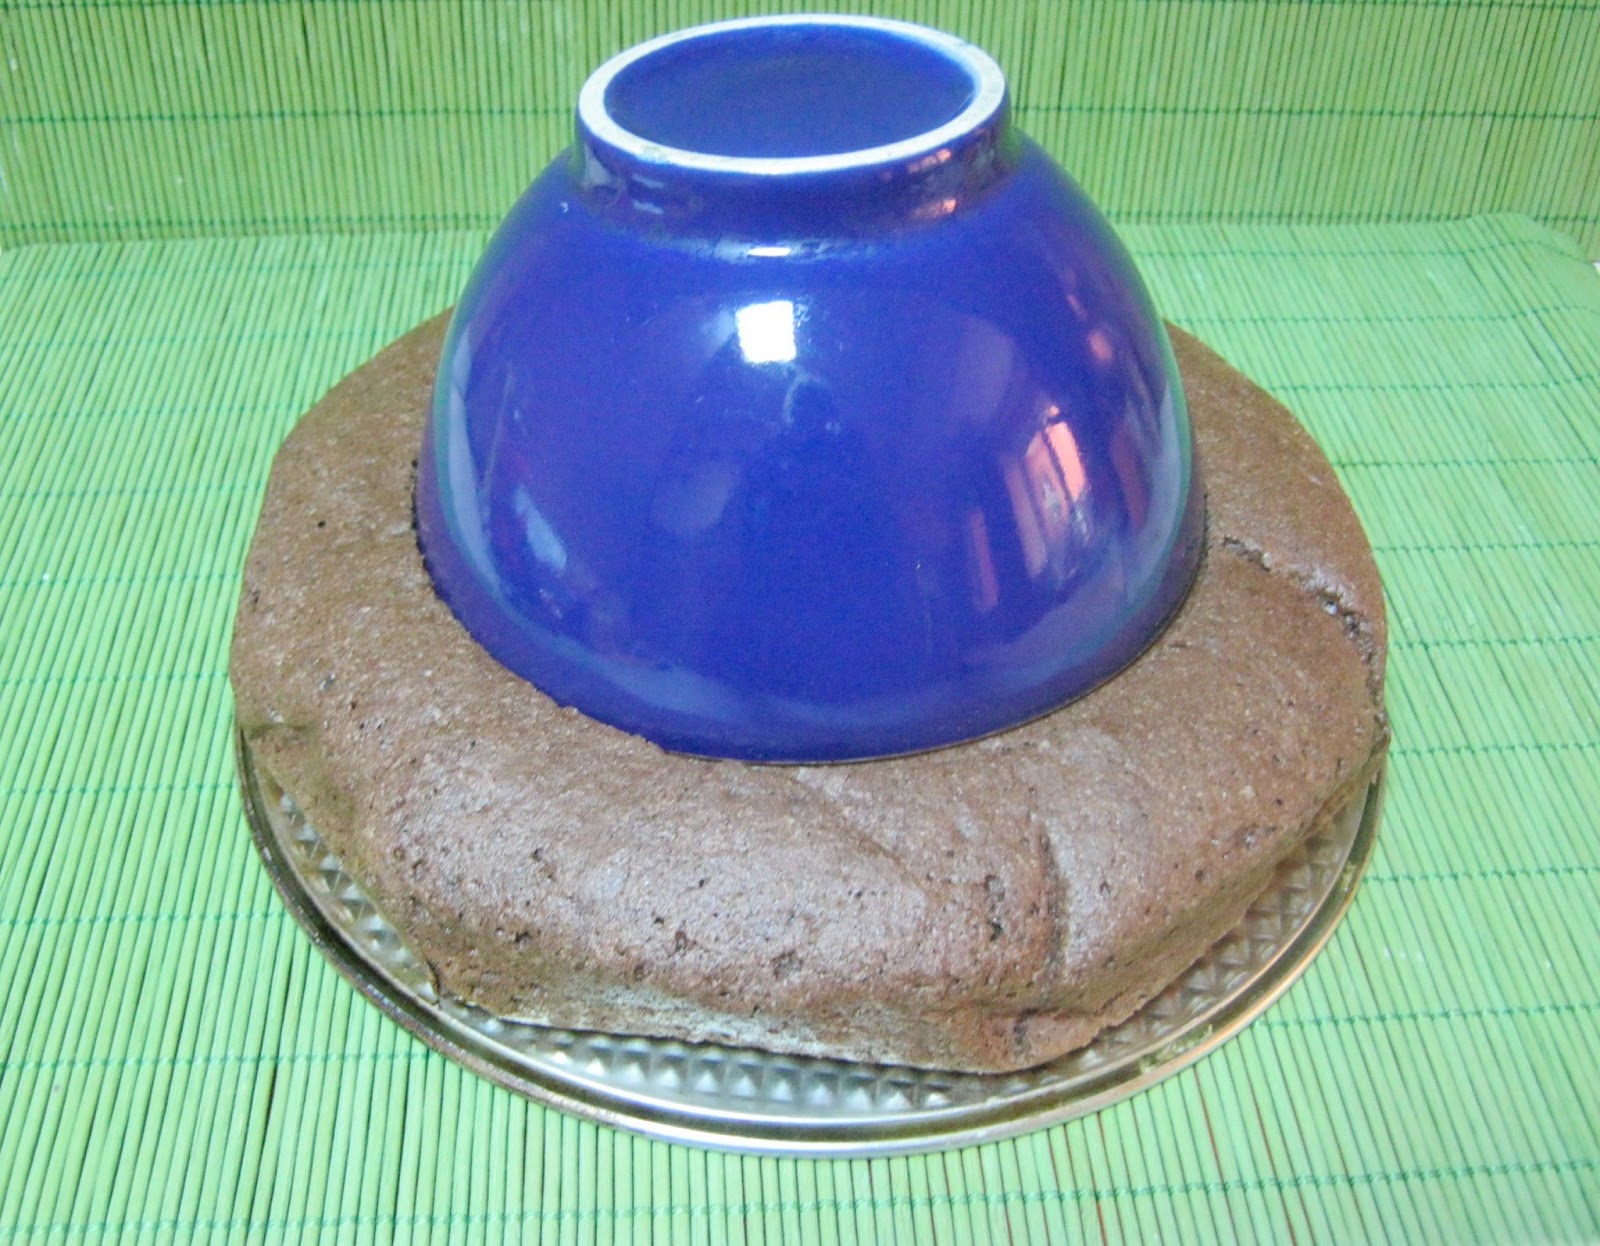 Tort alb-negru cu crema de martipan, capsuni si frisca